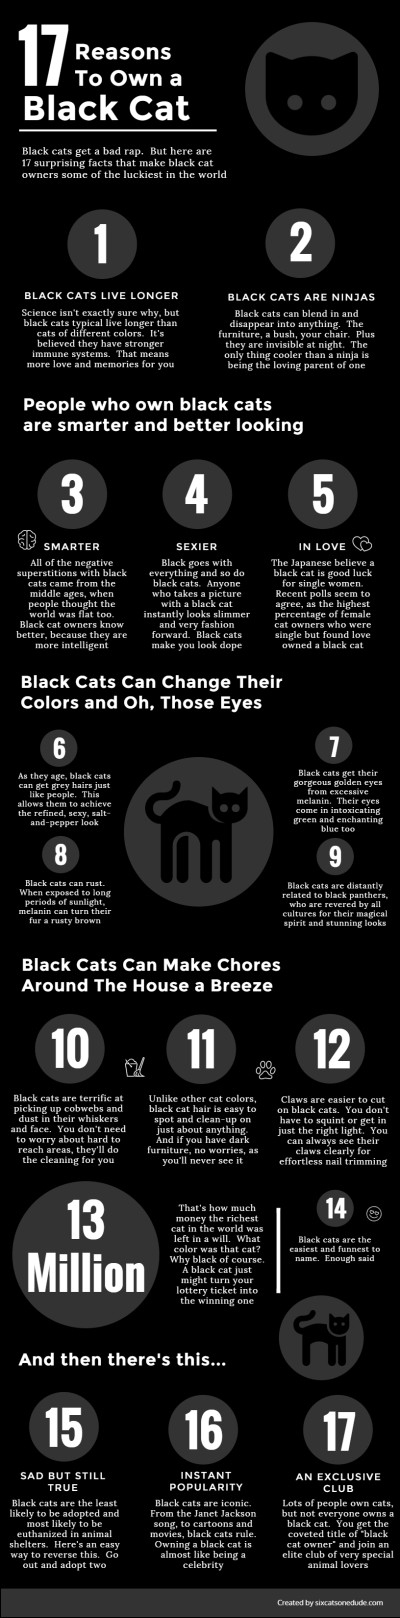 17-reasons-black-cat-